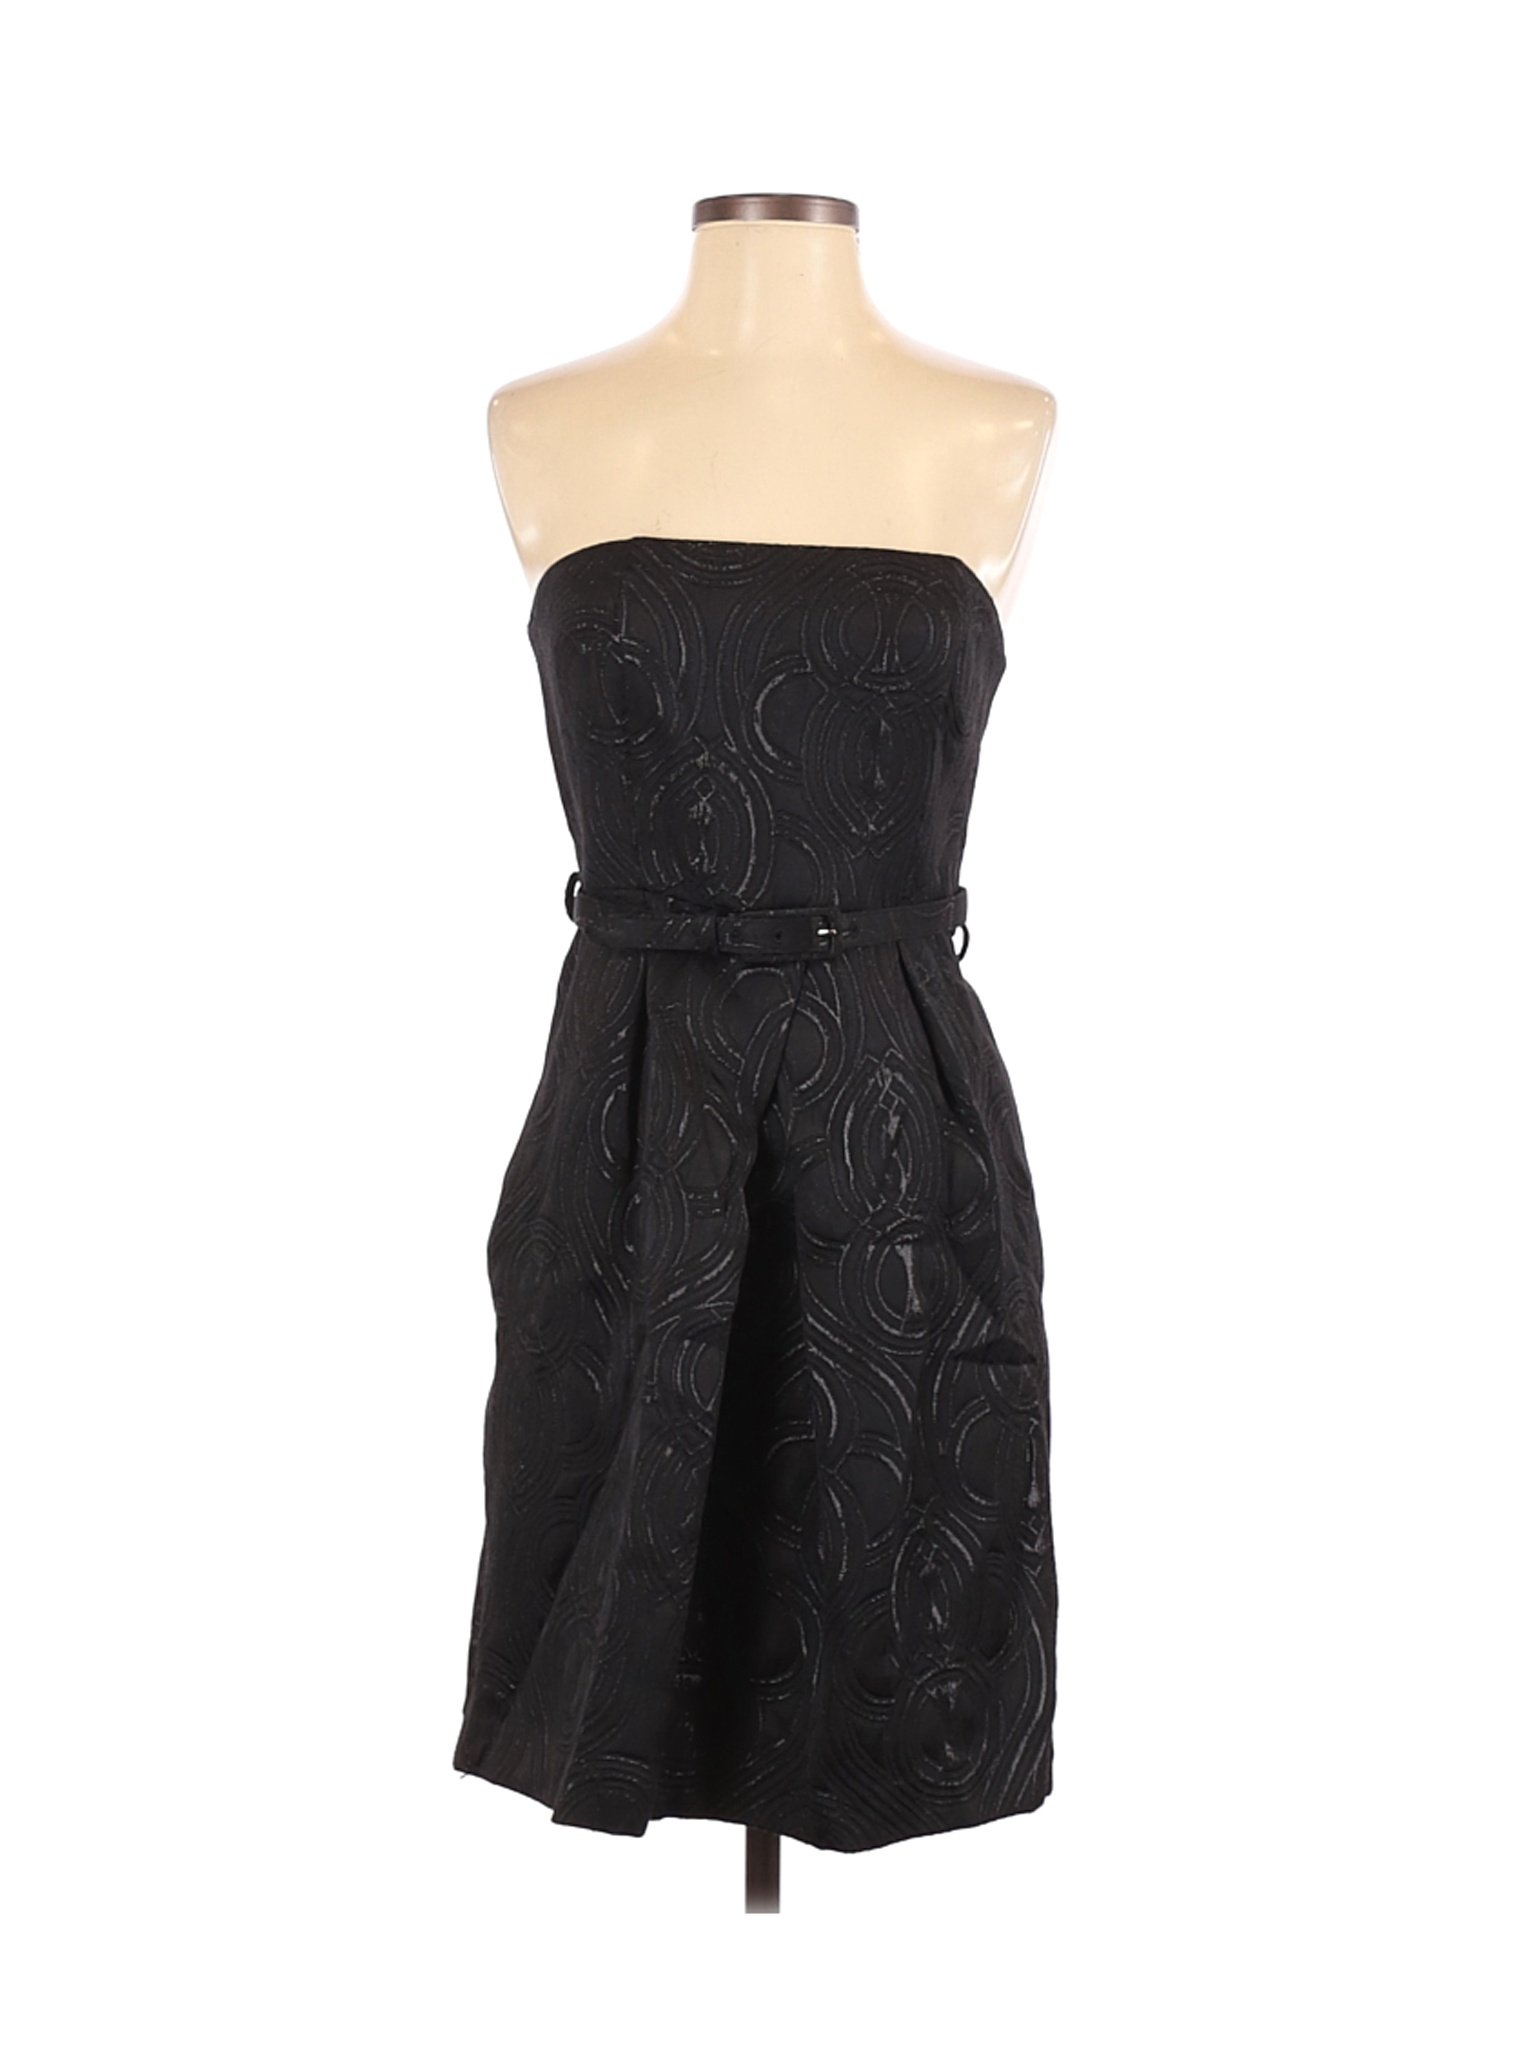 Target Limited Edition Women Black Cocktail Dress 4 | eBay